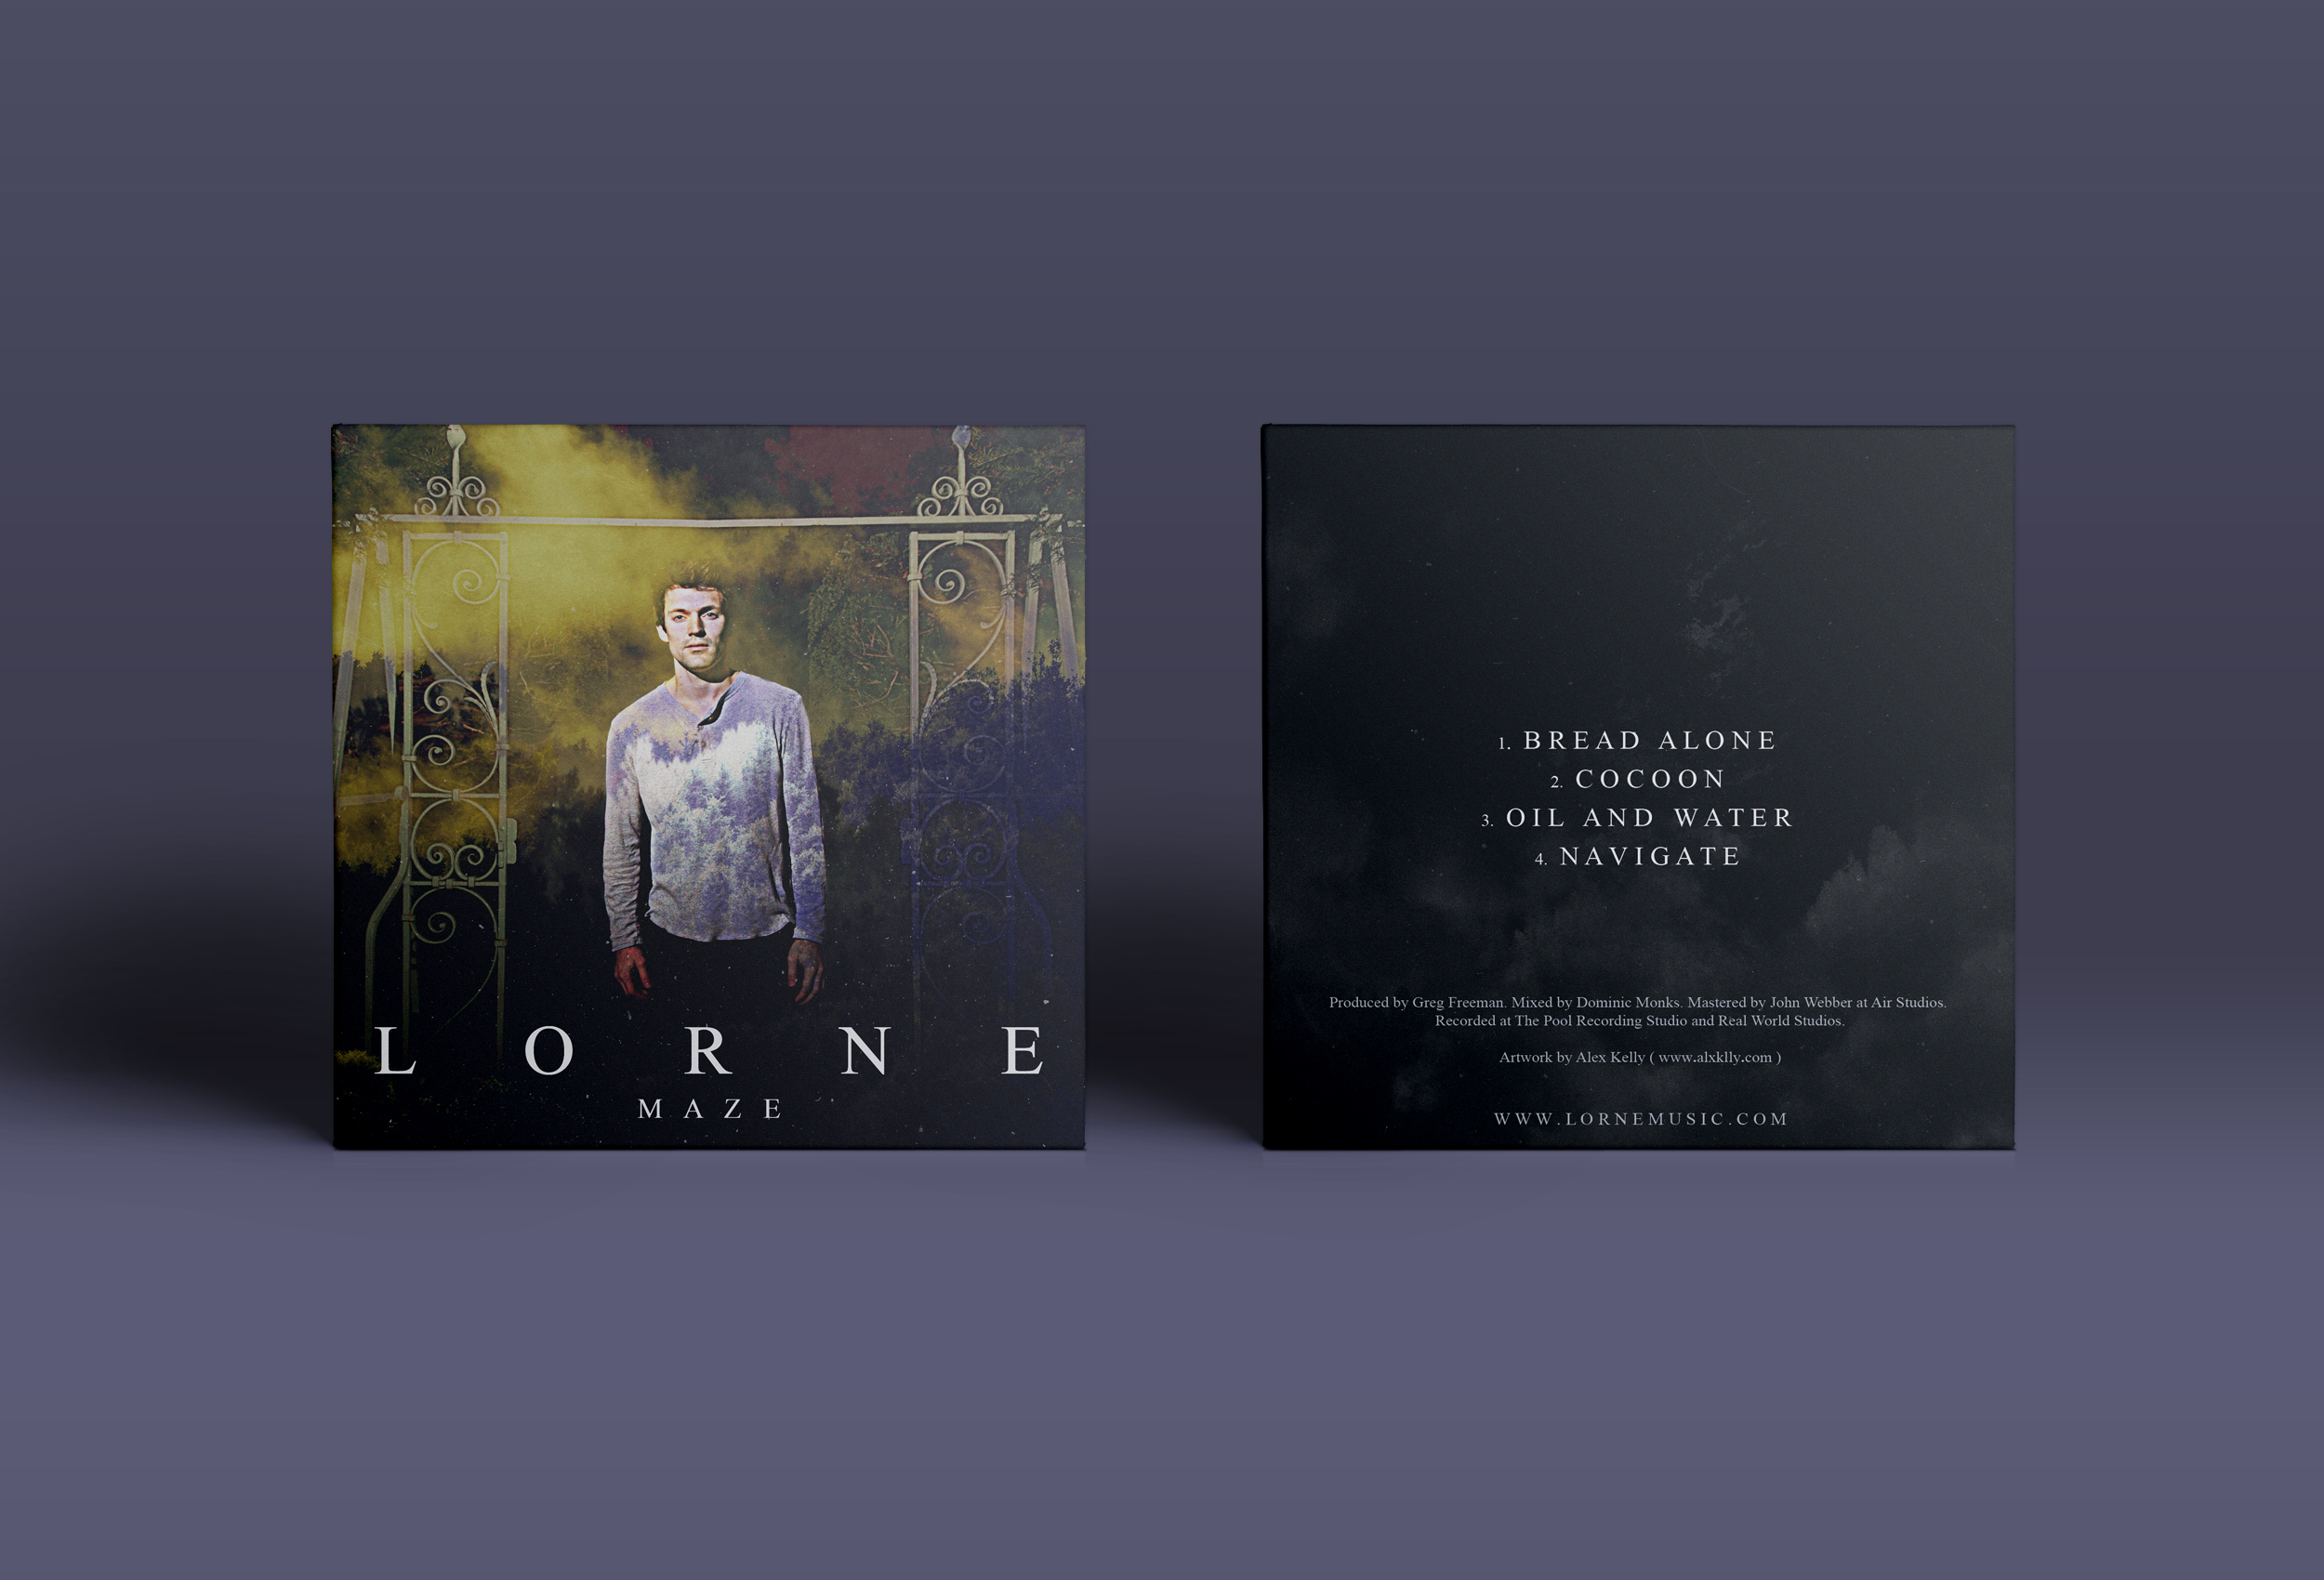 Lorne - Maze album artwork and CD packaging design.